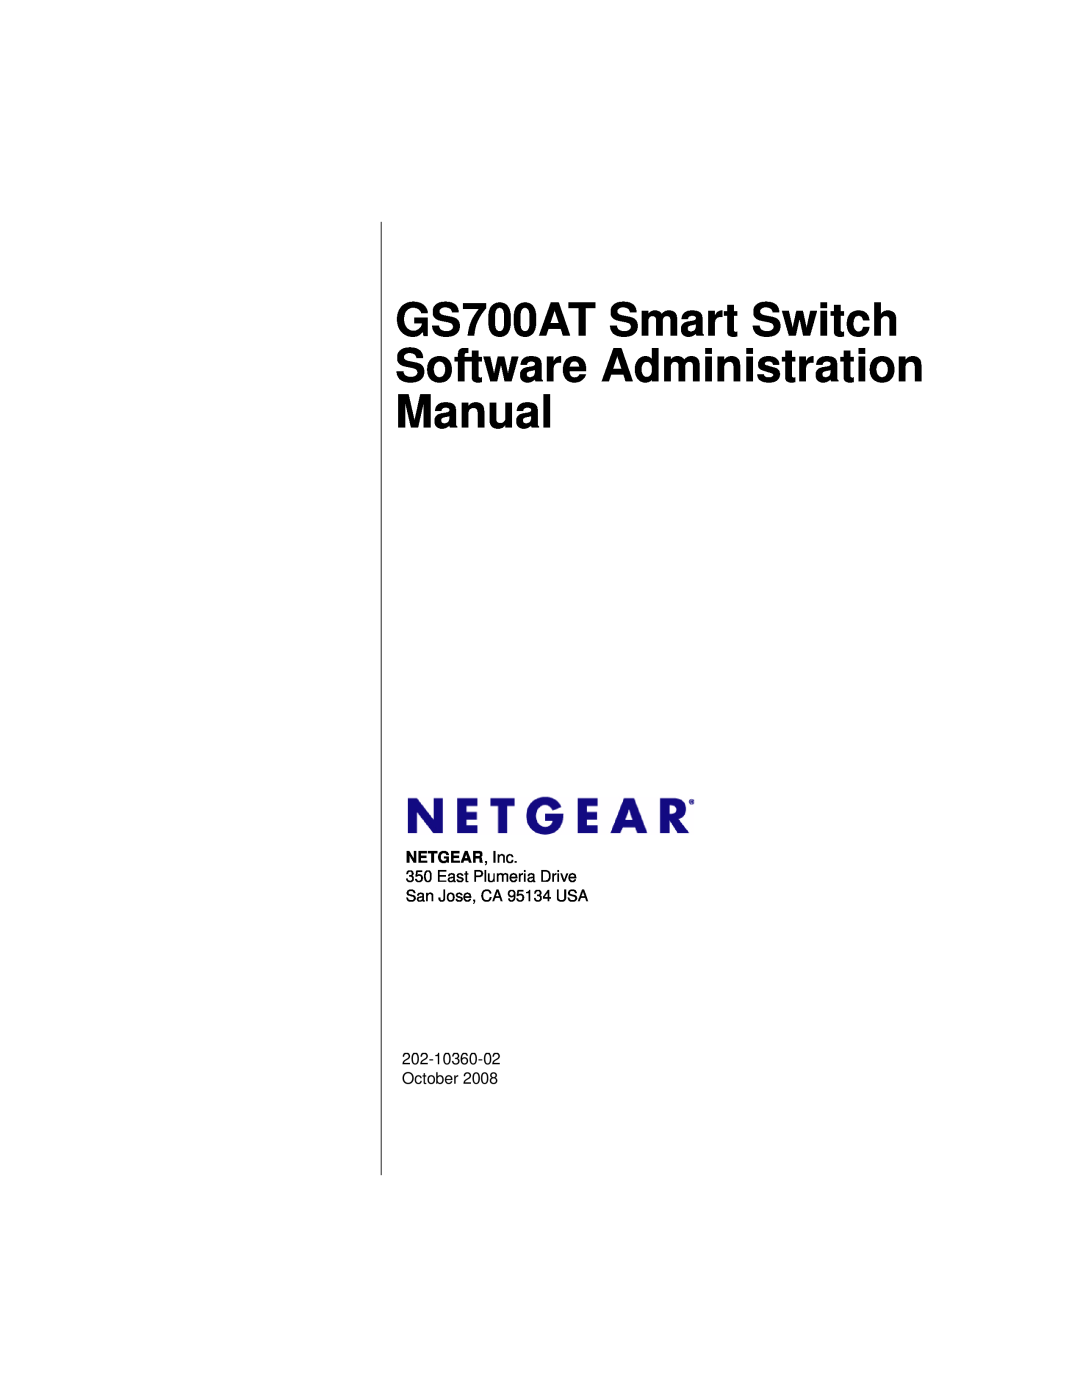 NETGEAR manual GS700AT Smart Switch Software Administration Manual, NETGEAR, Inc, October 